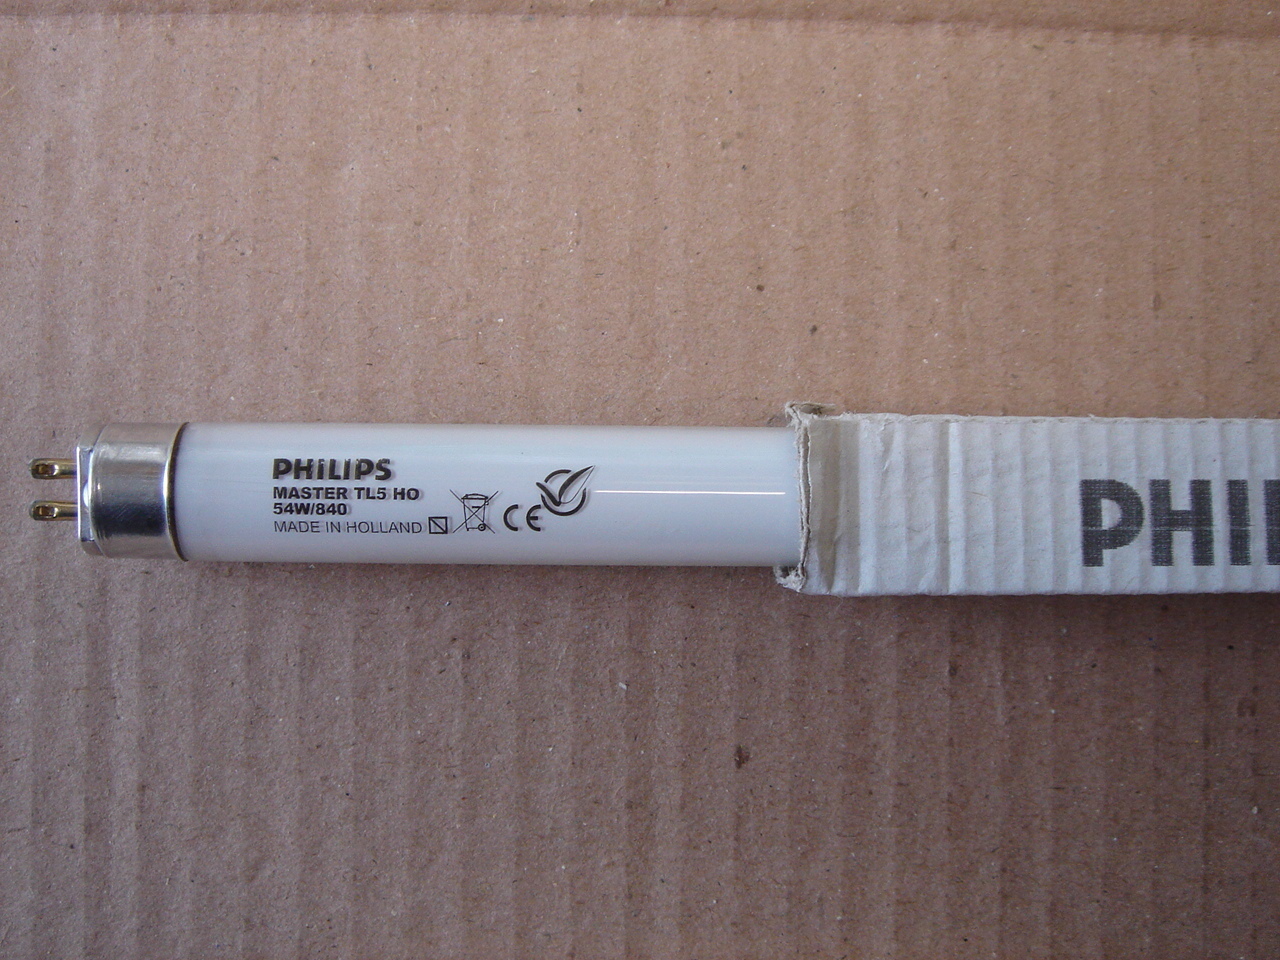 Philips tl d 54 765. Лампа al54.